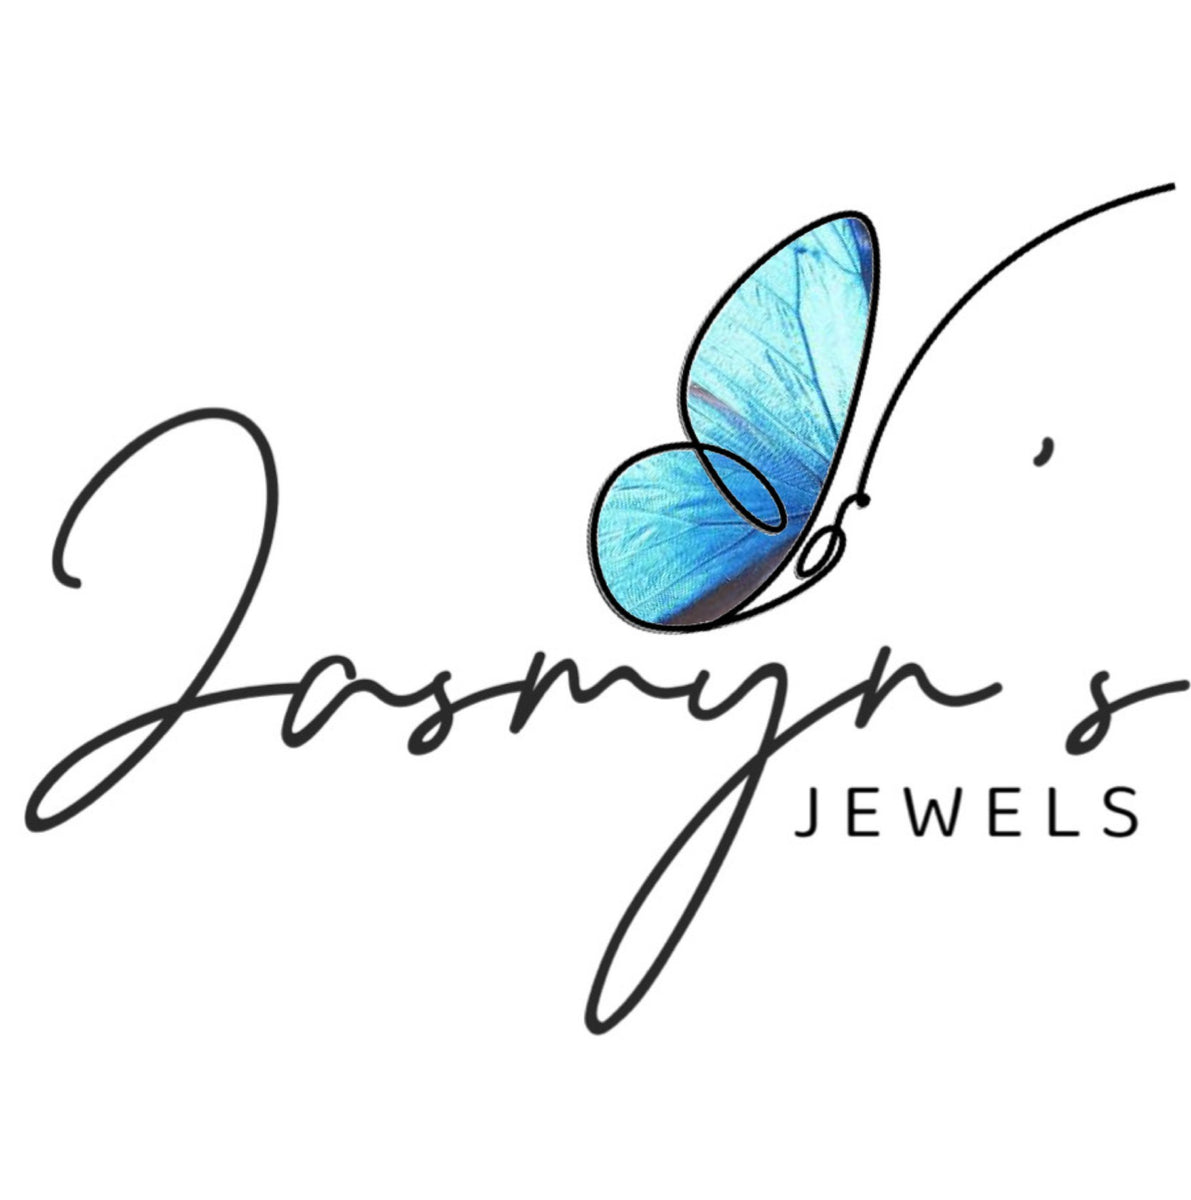 Shoe charms – Jasmyn's Jewels